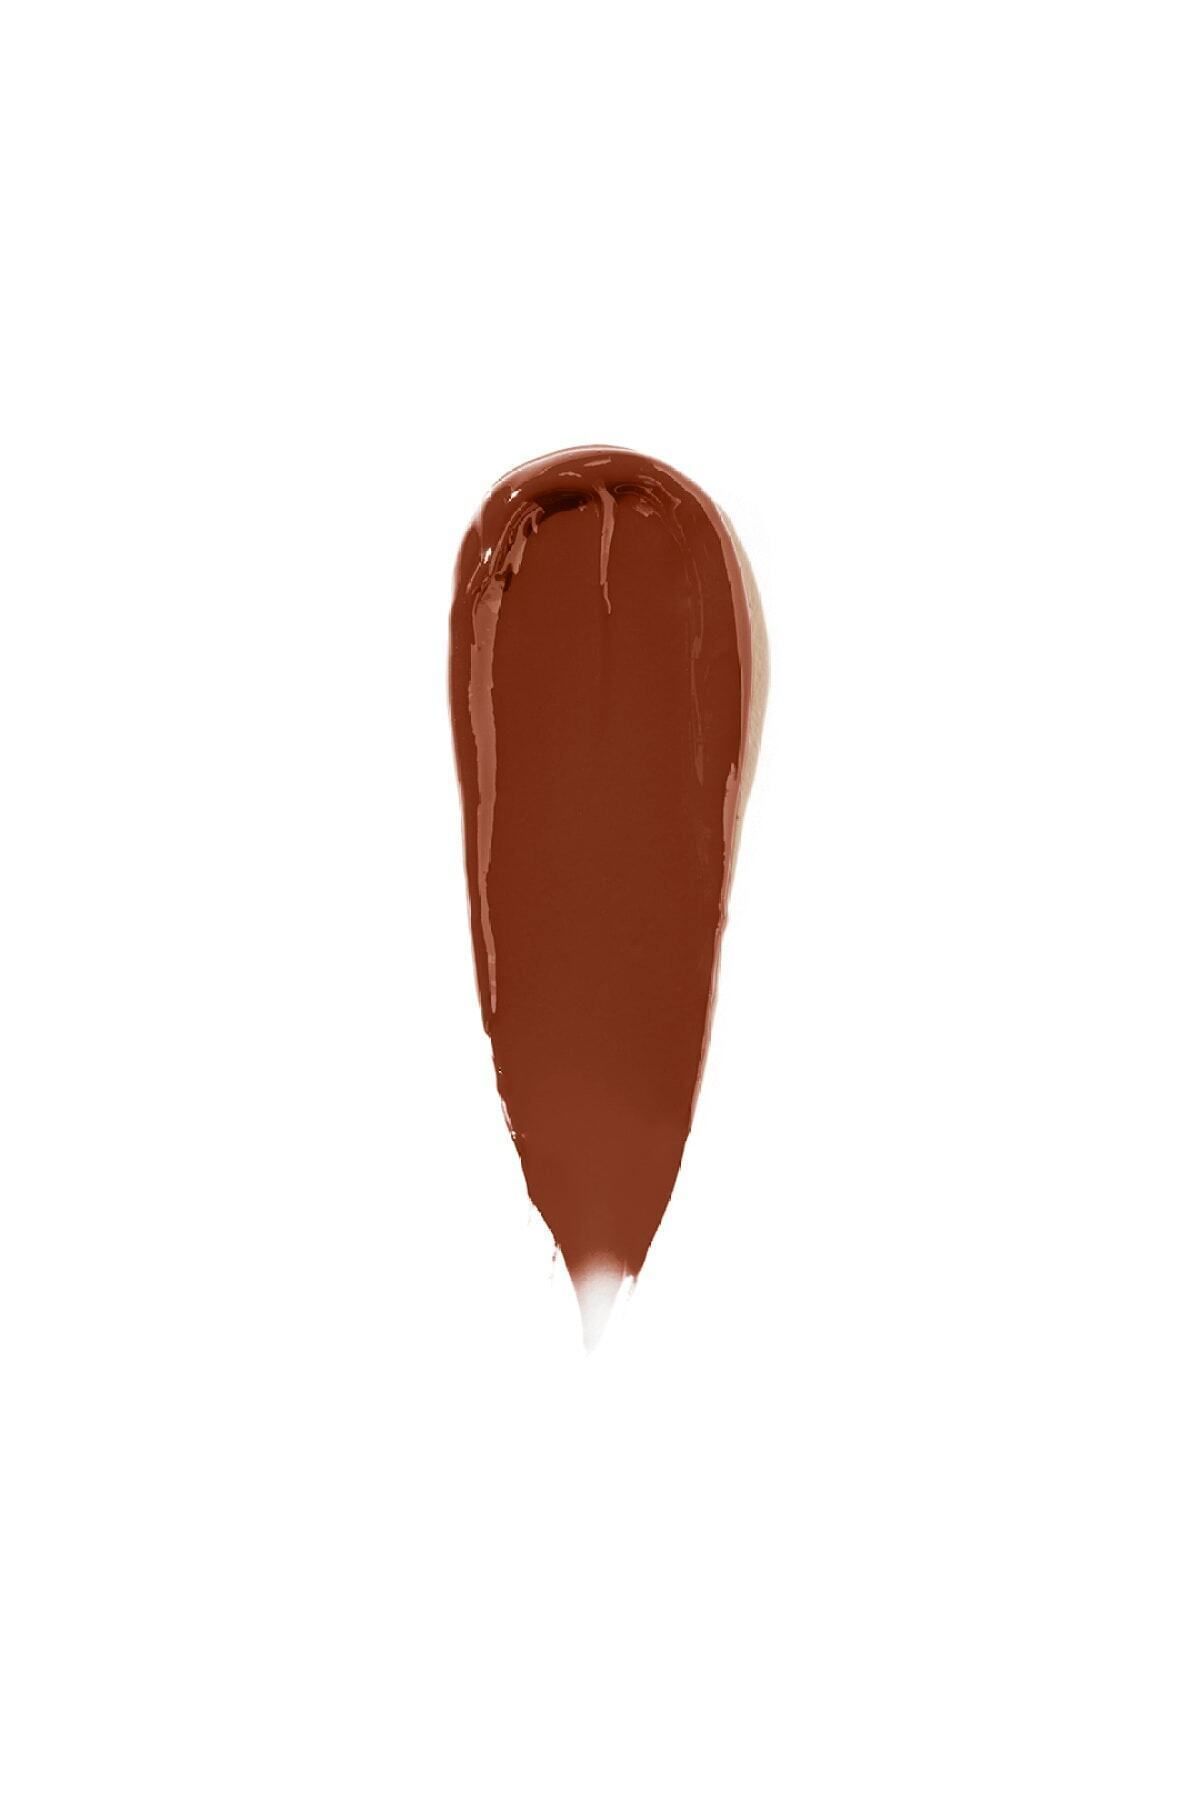 Bobbi Brown لوازم آرایشی قهوه ای بوتیک رژ لب با رنگدانه های بسیار غنی و پایان مخملی